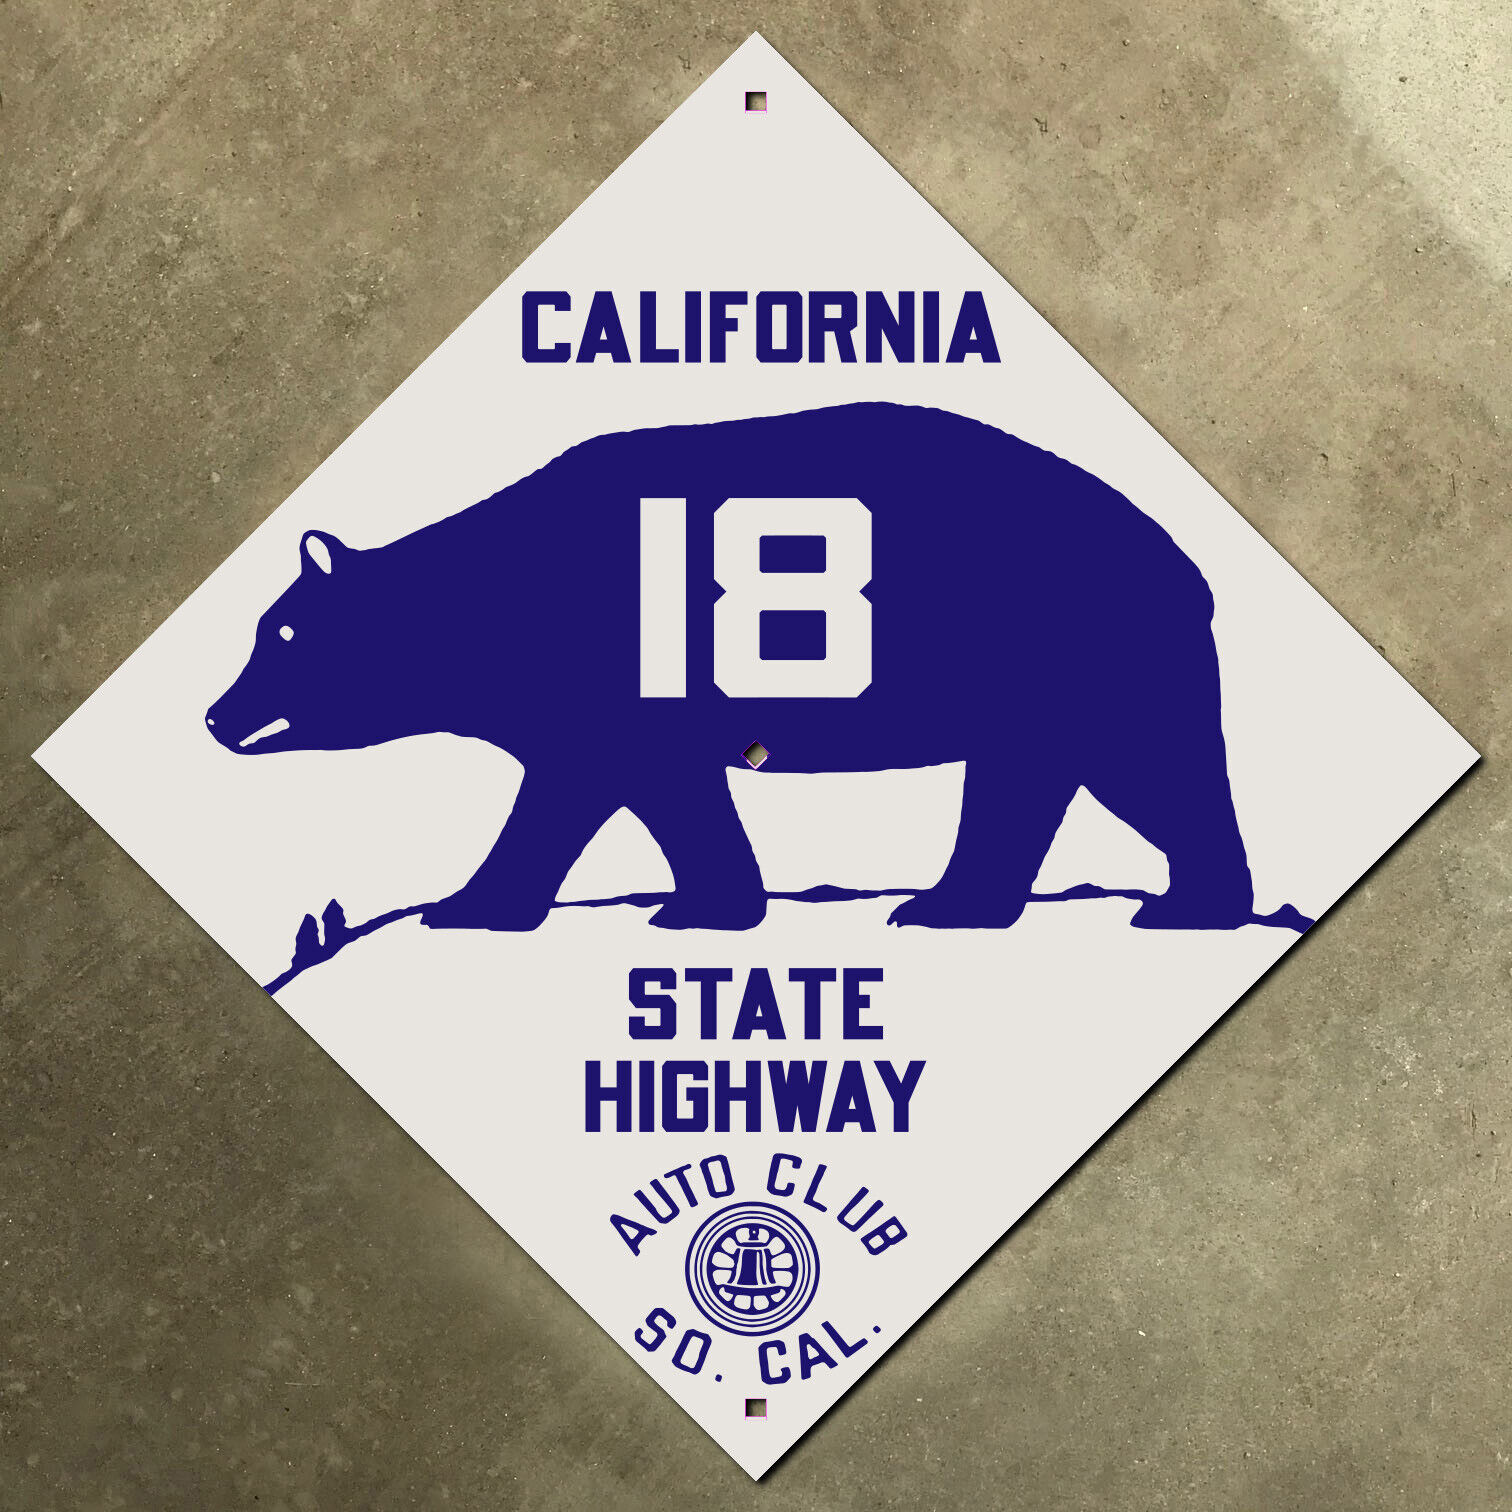 California state highway 18 ACSC road sign auto club AAA diamond 1929 bear